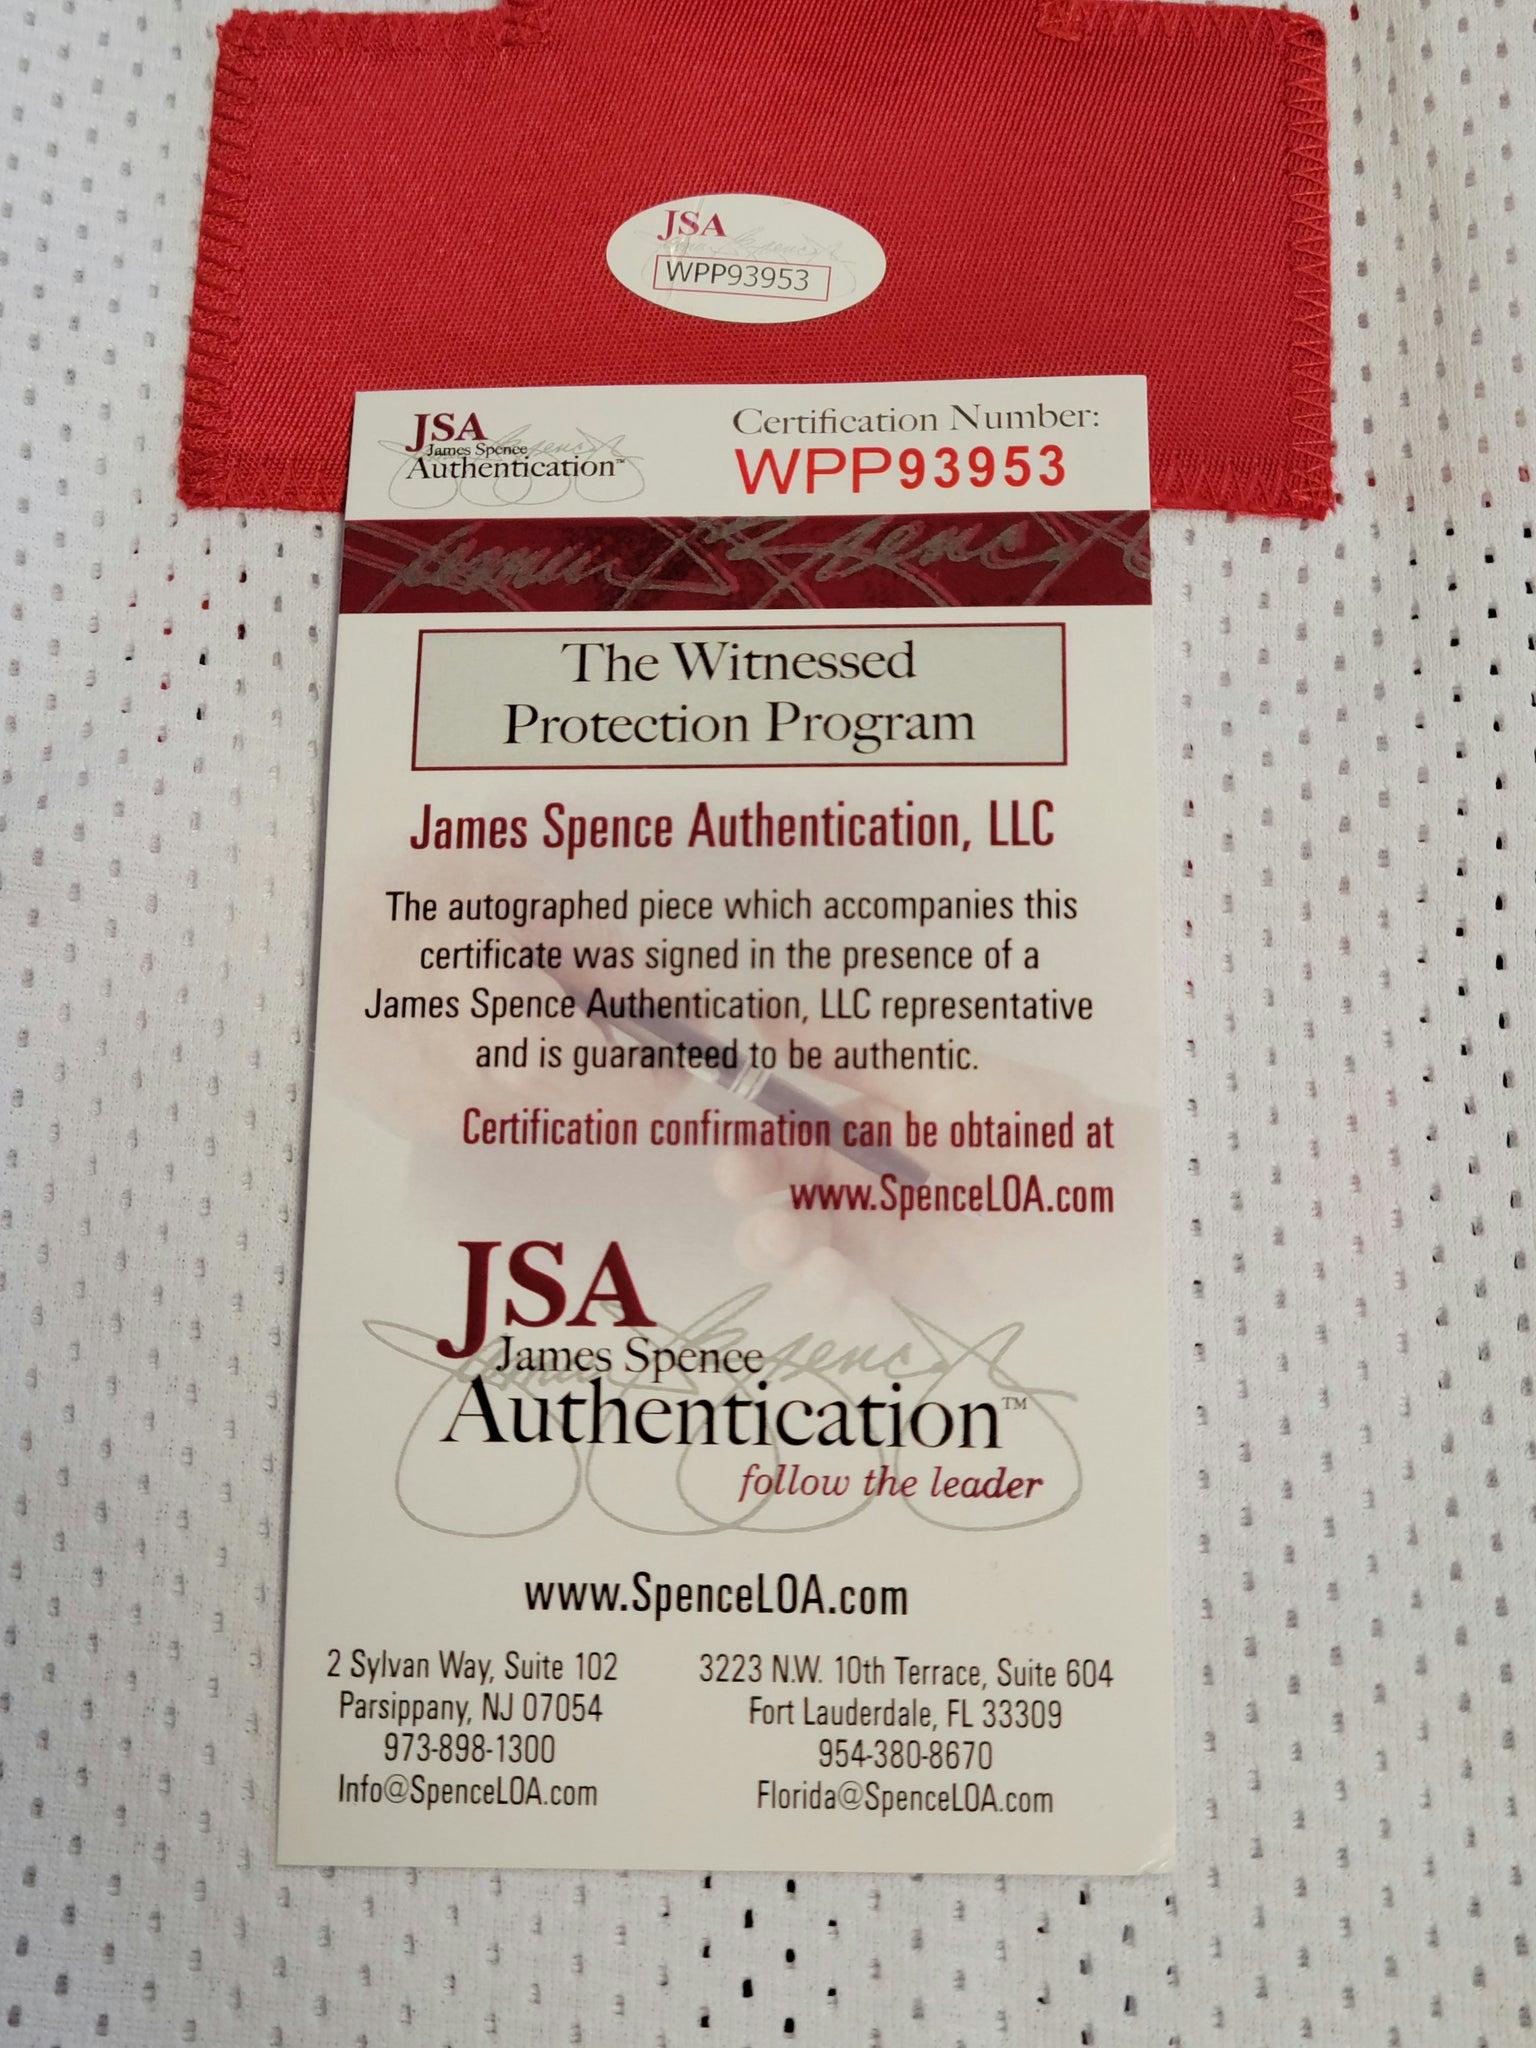 Dante Pettis Authentic Signed Pro Style Jersey Autographed JSA